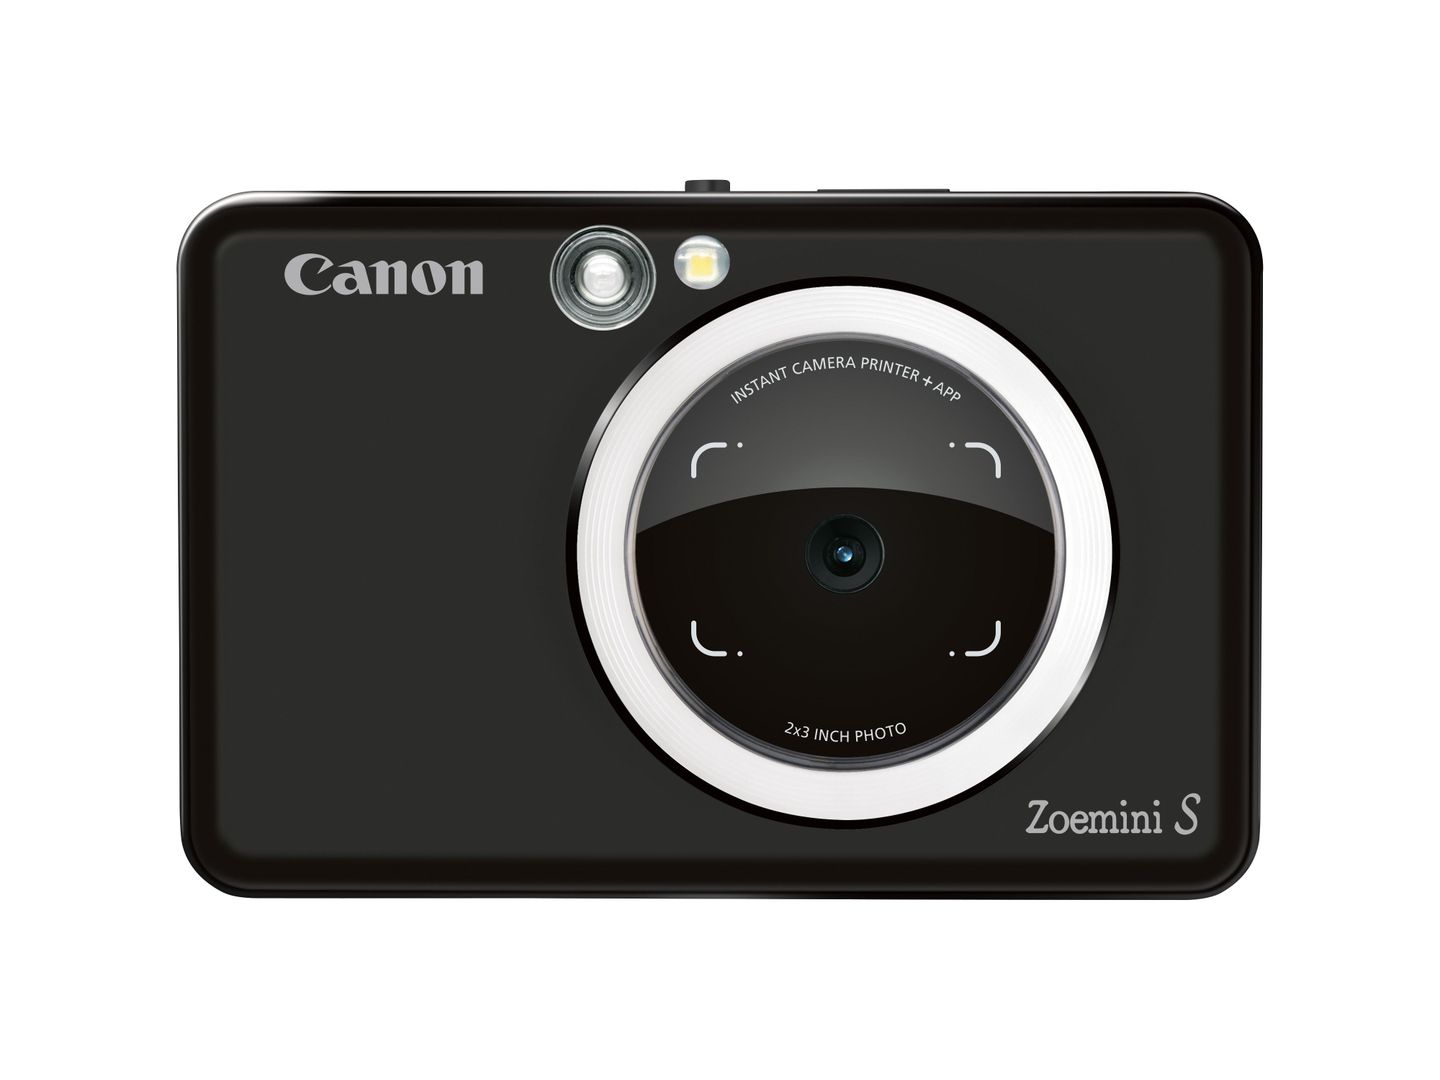 Zoemini C - Canon Europe